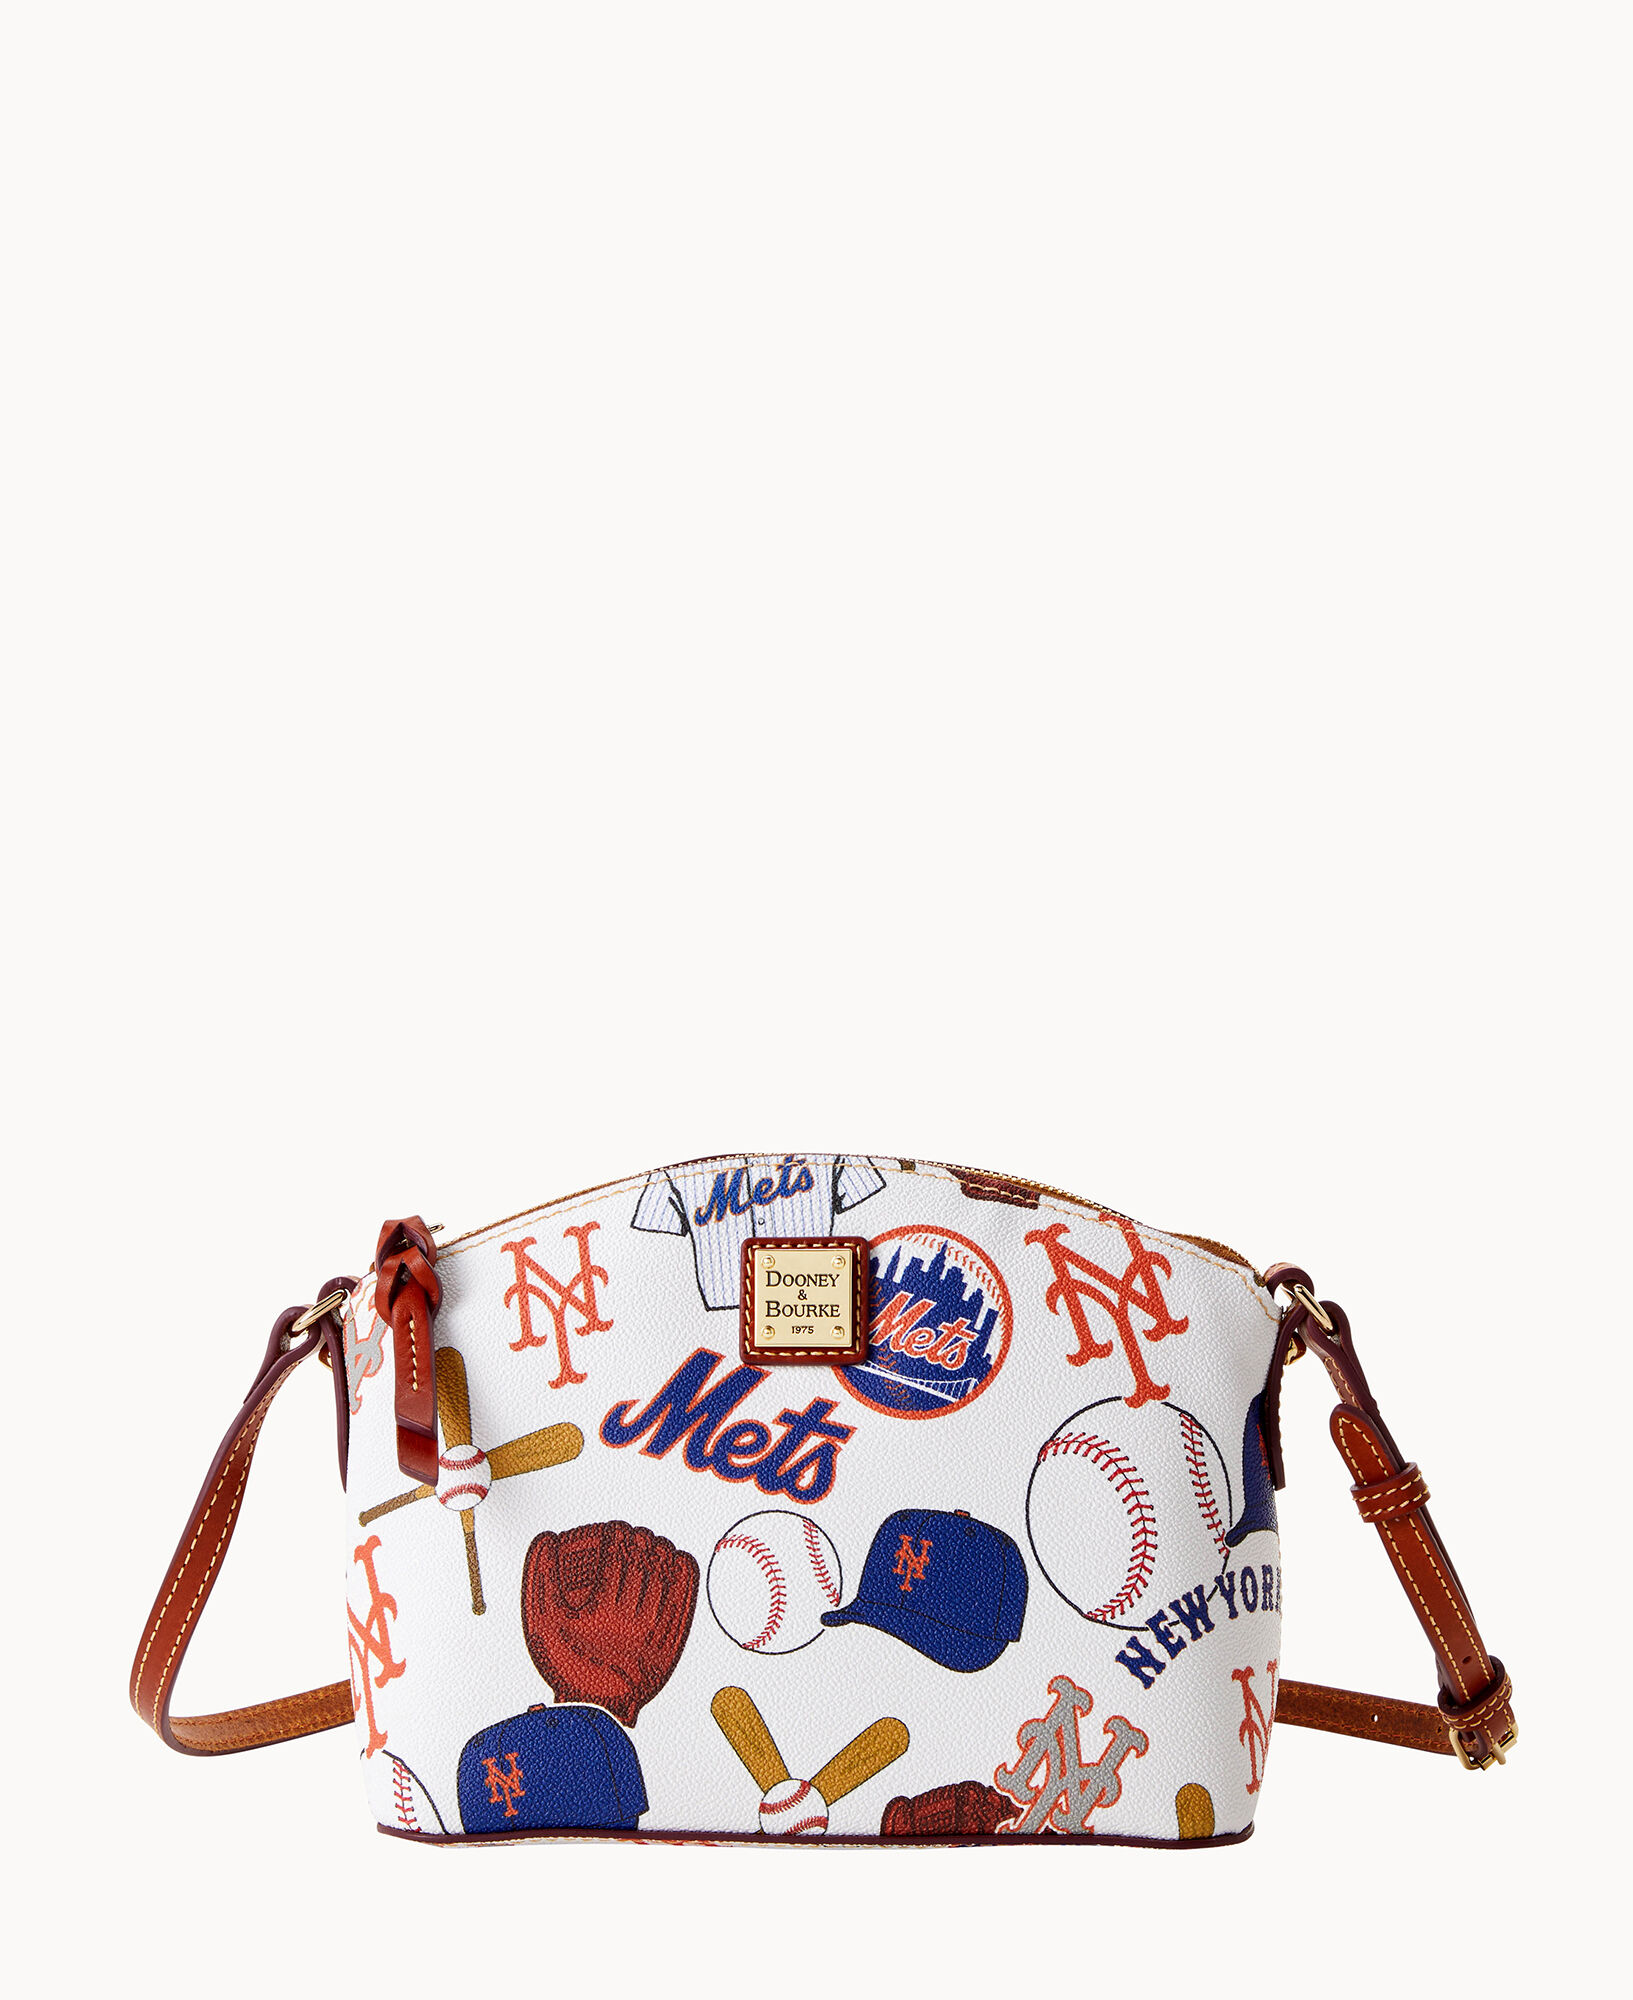 Dooney & Bourke New York Mets Game Day Hobo Bag